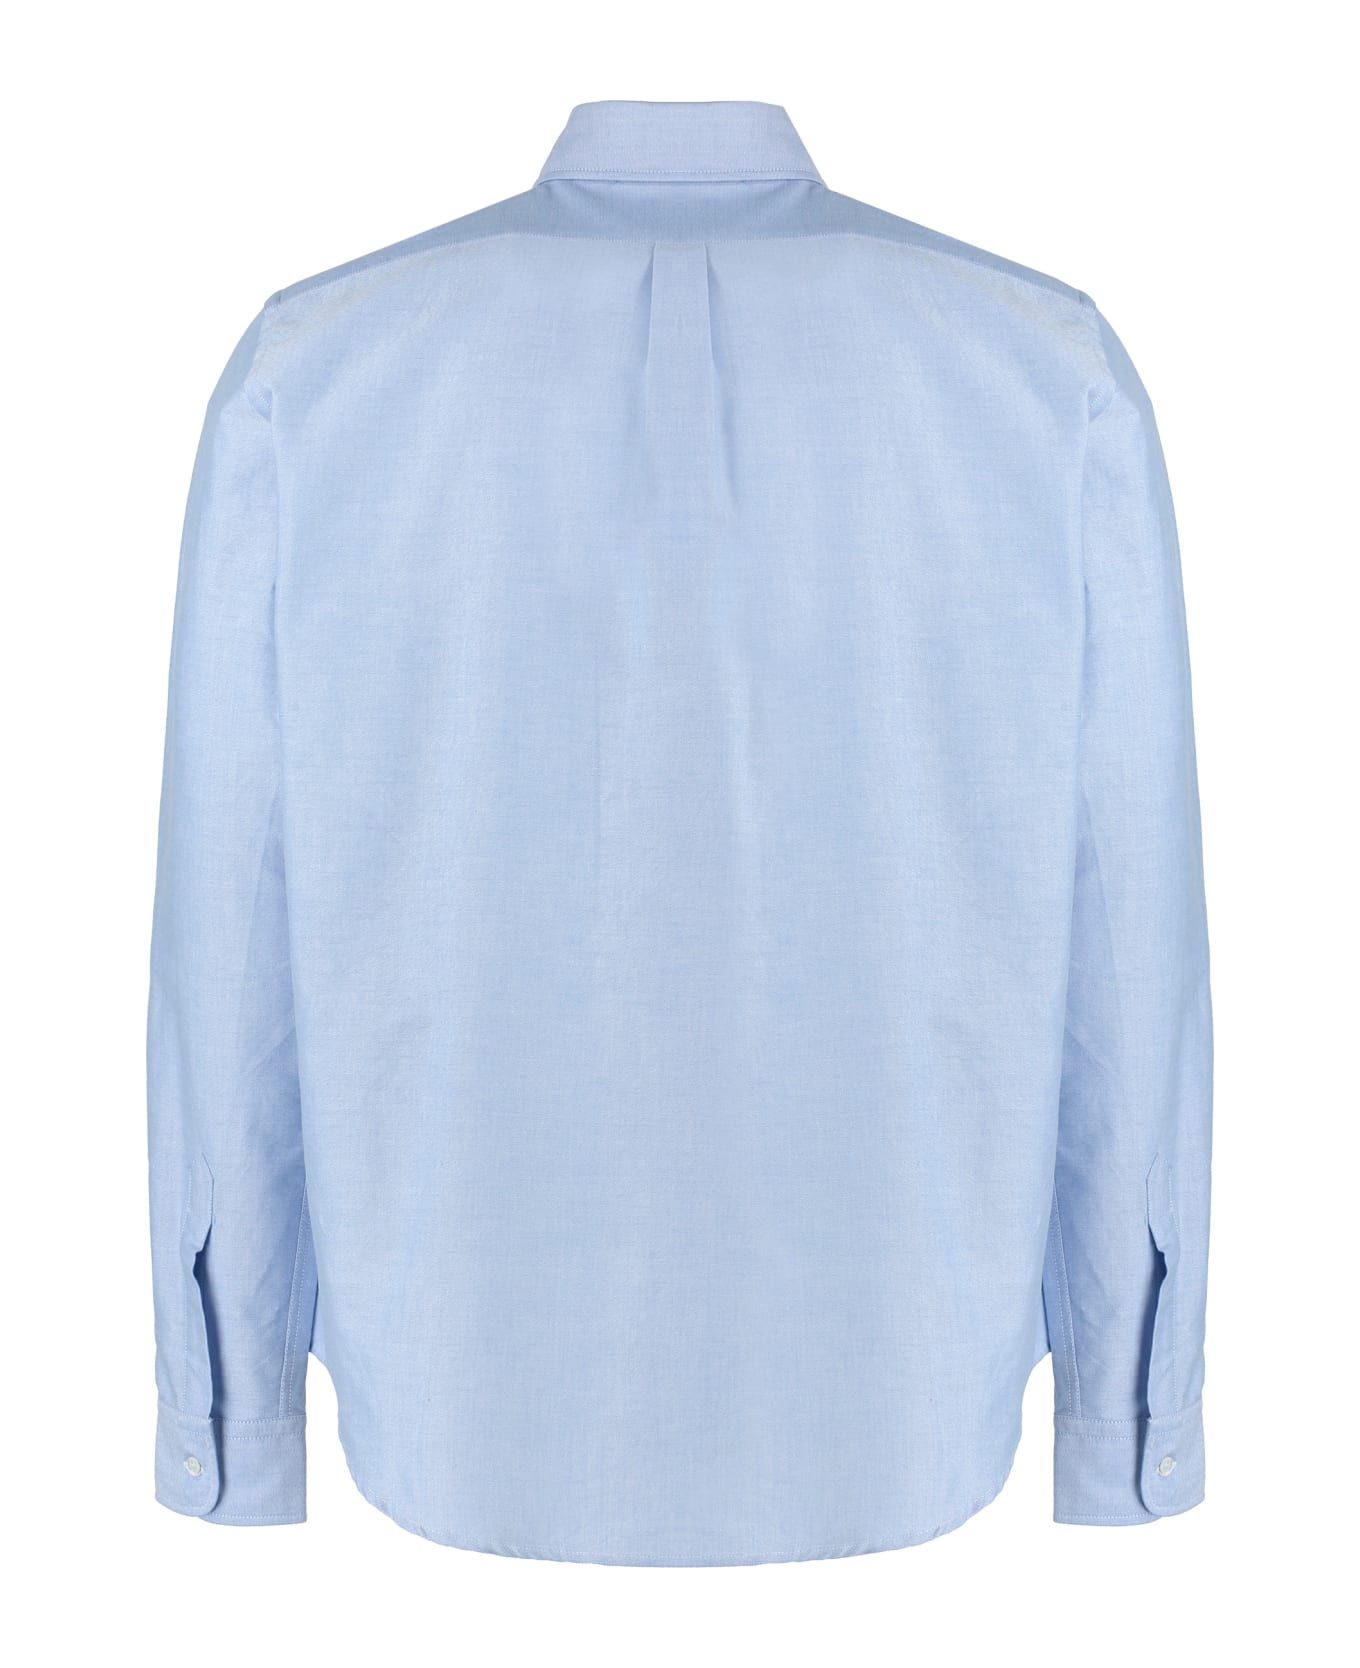 Aspesi Cotton Poplin Shirt - Light Blue シャツ